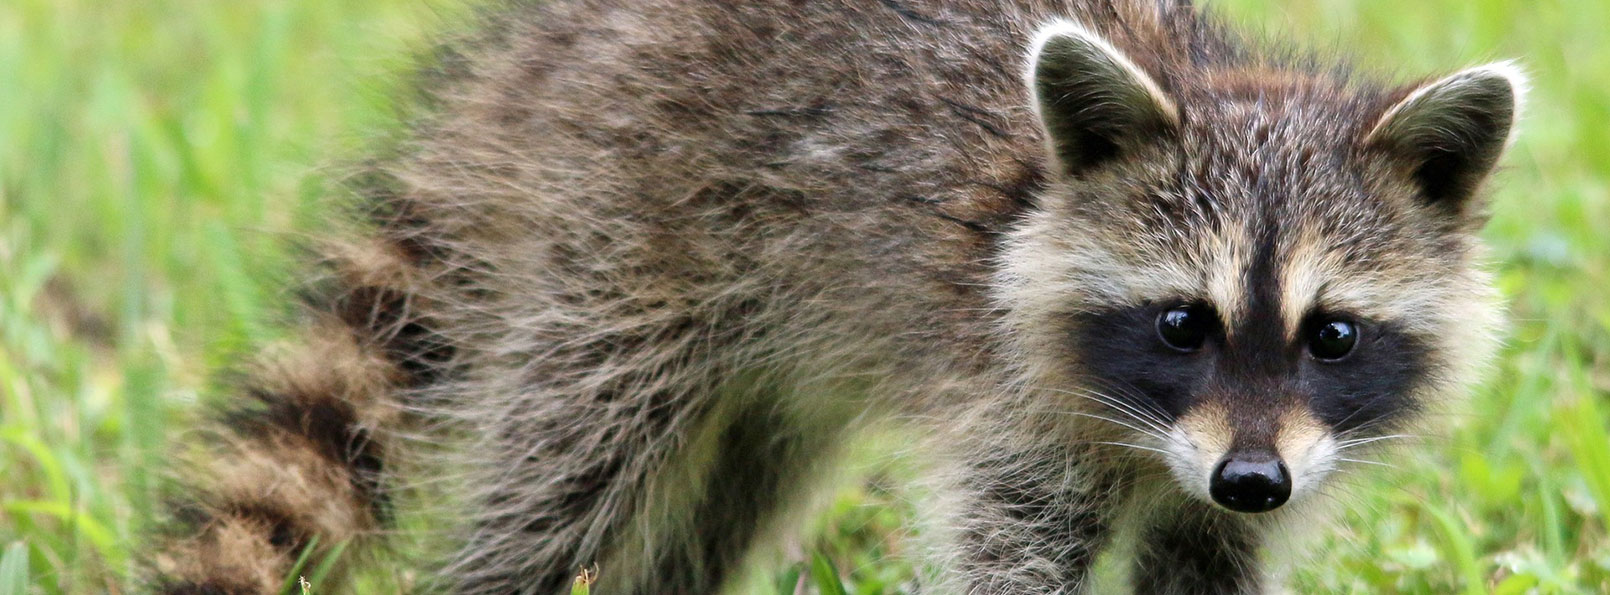 Nearly 100 juvenile raccoons seized in Kawartha Lakes, Ontario